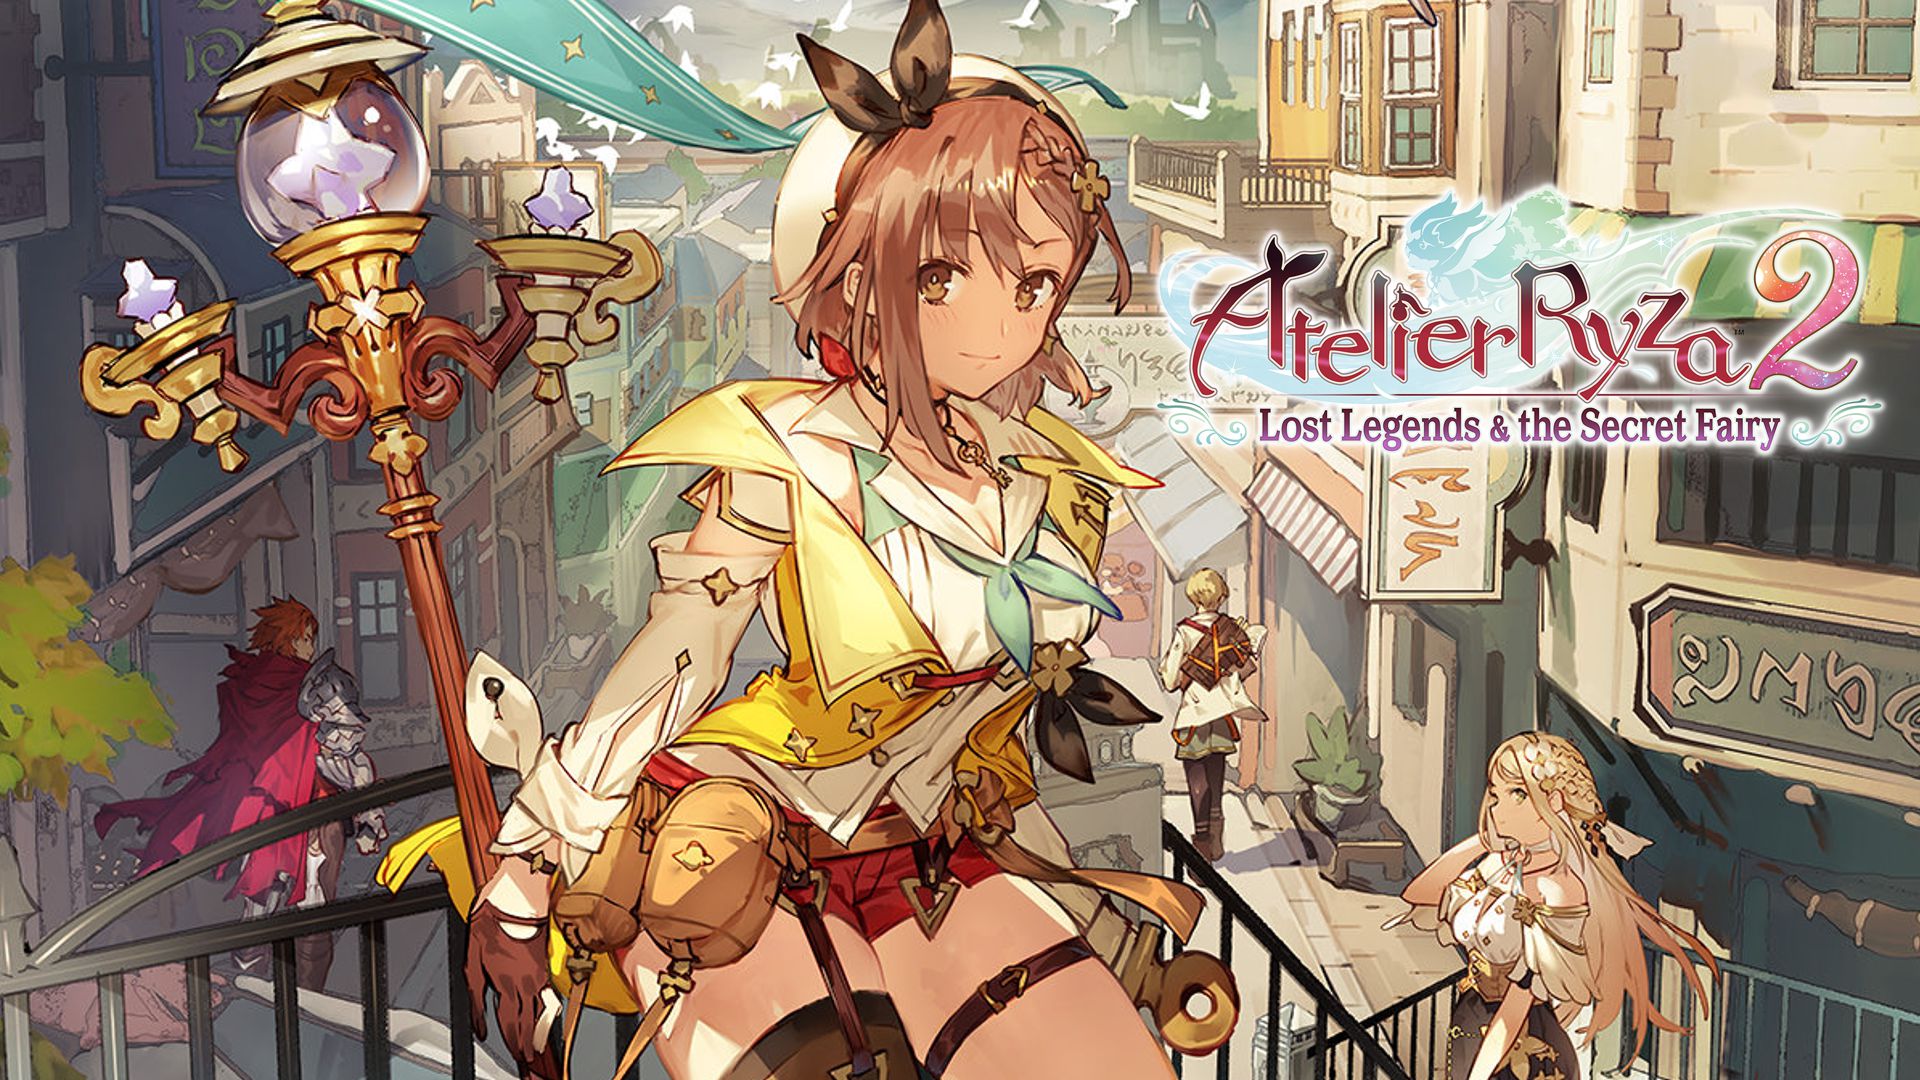 Atelier Ryza 2 Lost Legends & the Secret Fairy Principal